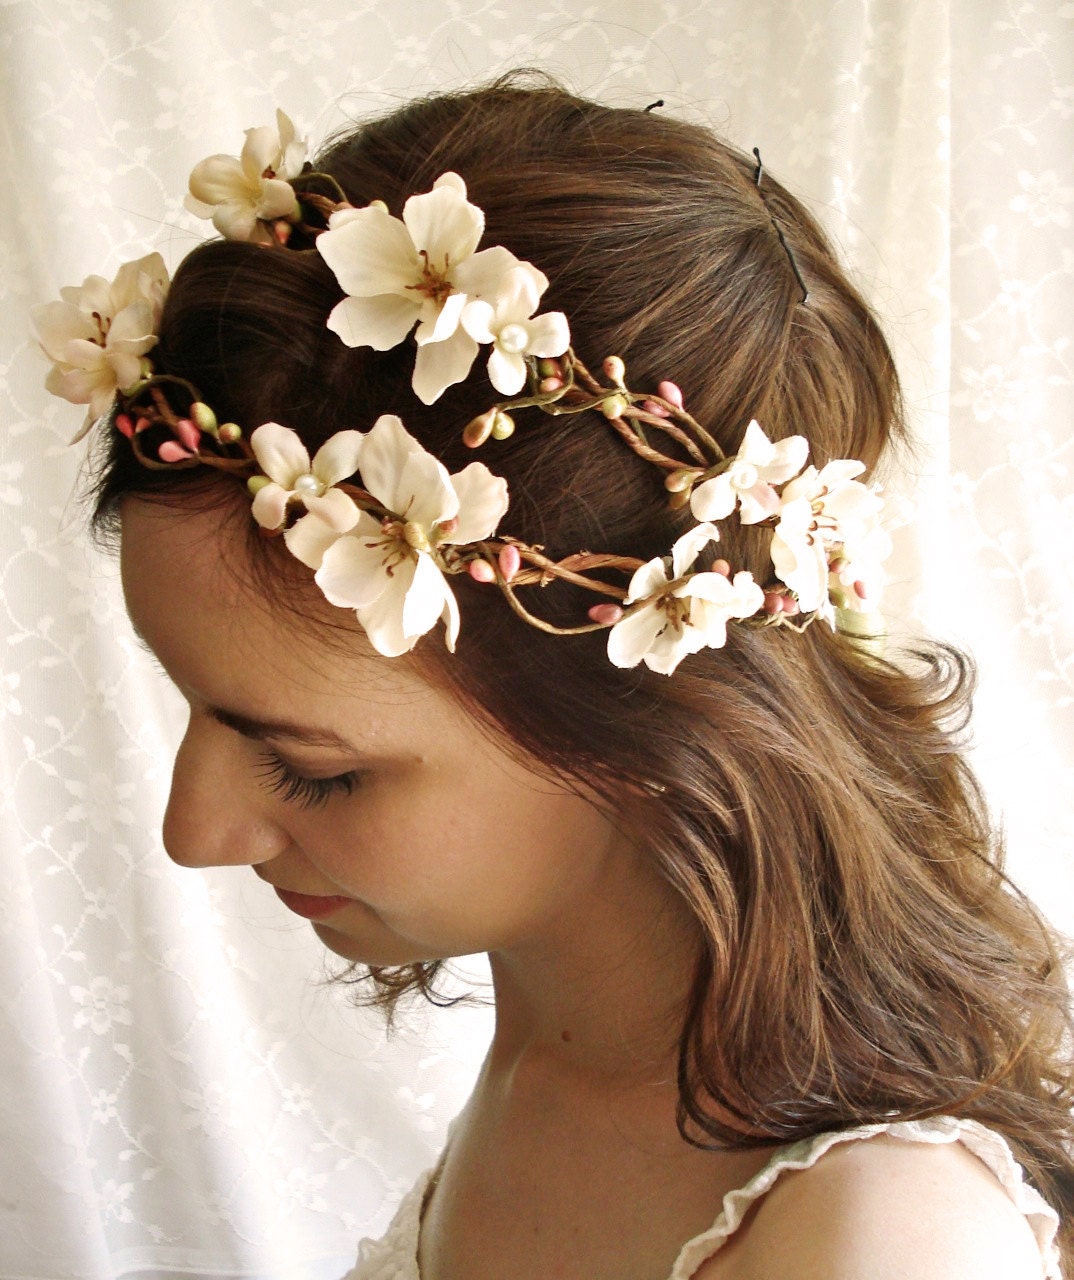 shepherdess - a floral head wreath in ivory/pink